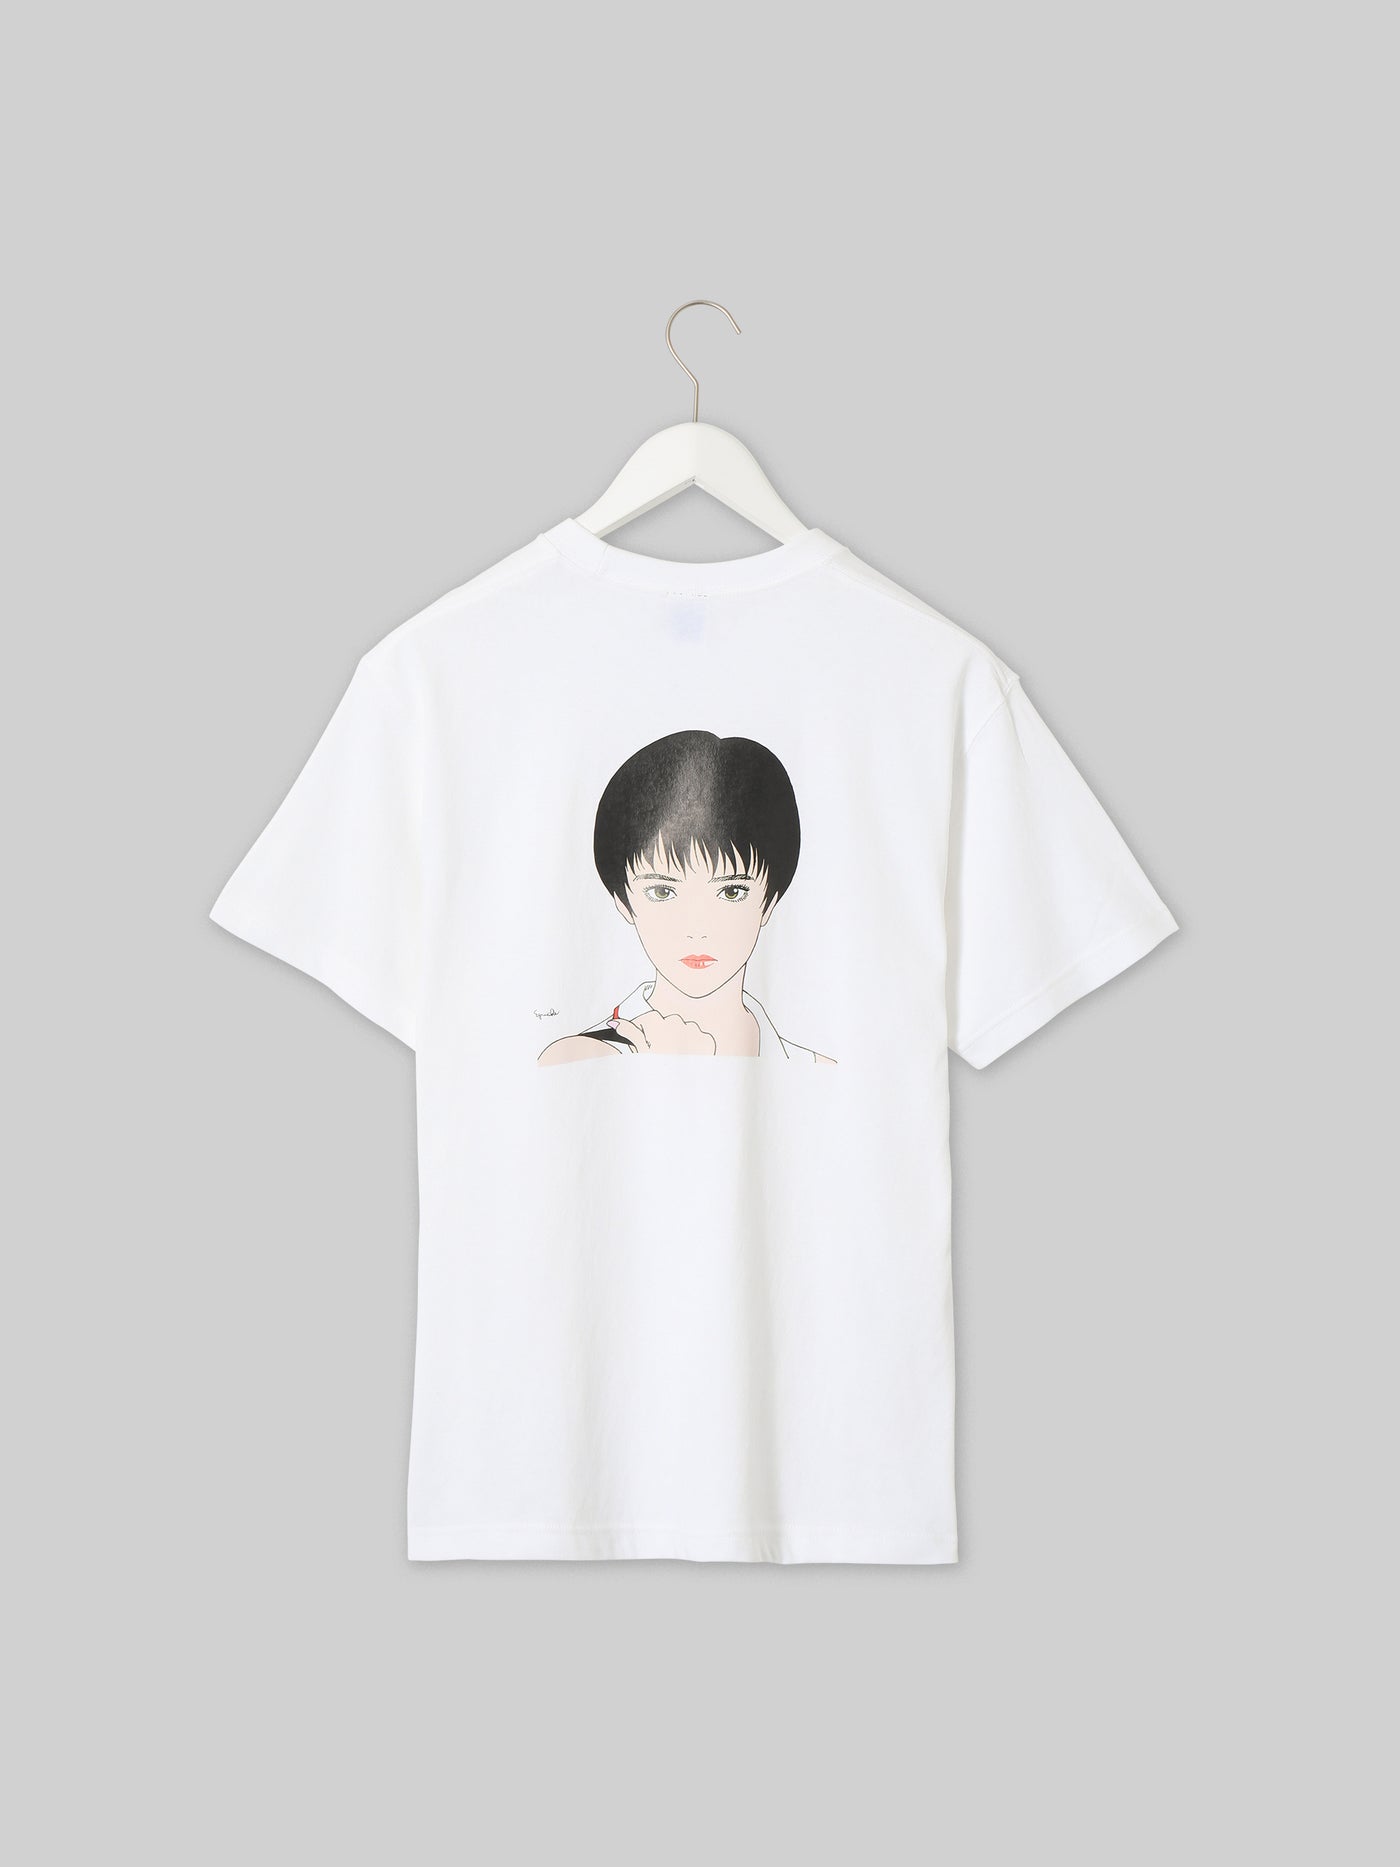 J. F. OBERLIN 江口寿史コラボ Tシャツ「ショートカット90」 OBLNロゴ ホワイト